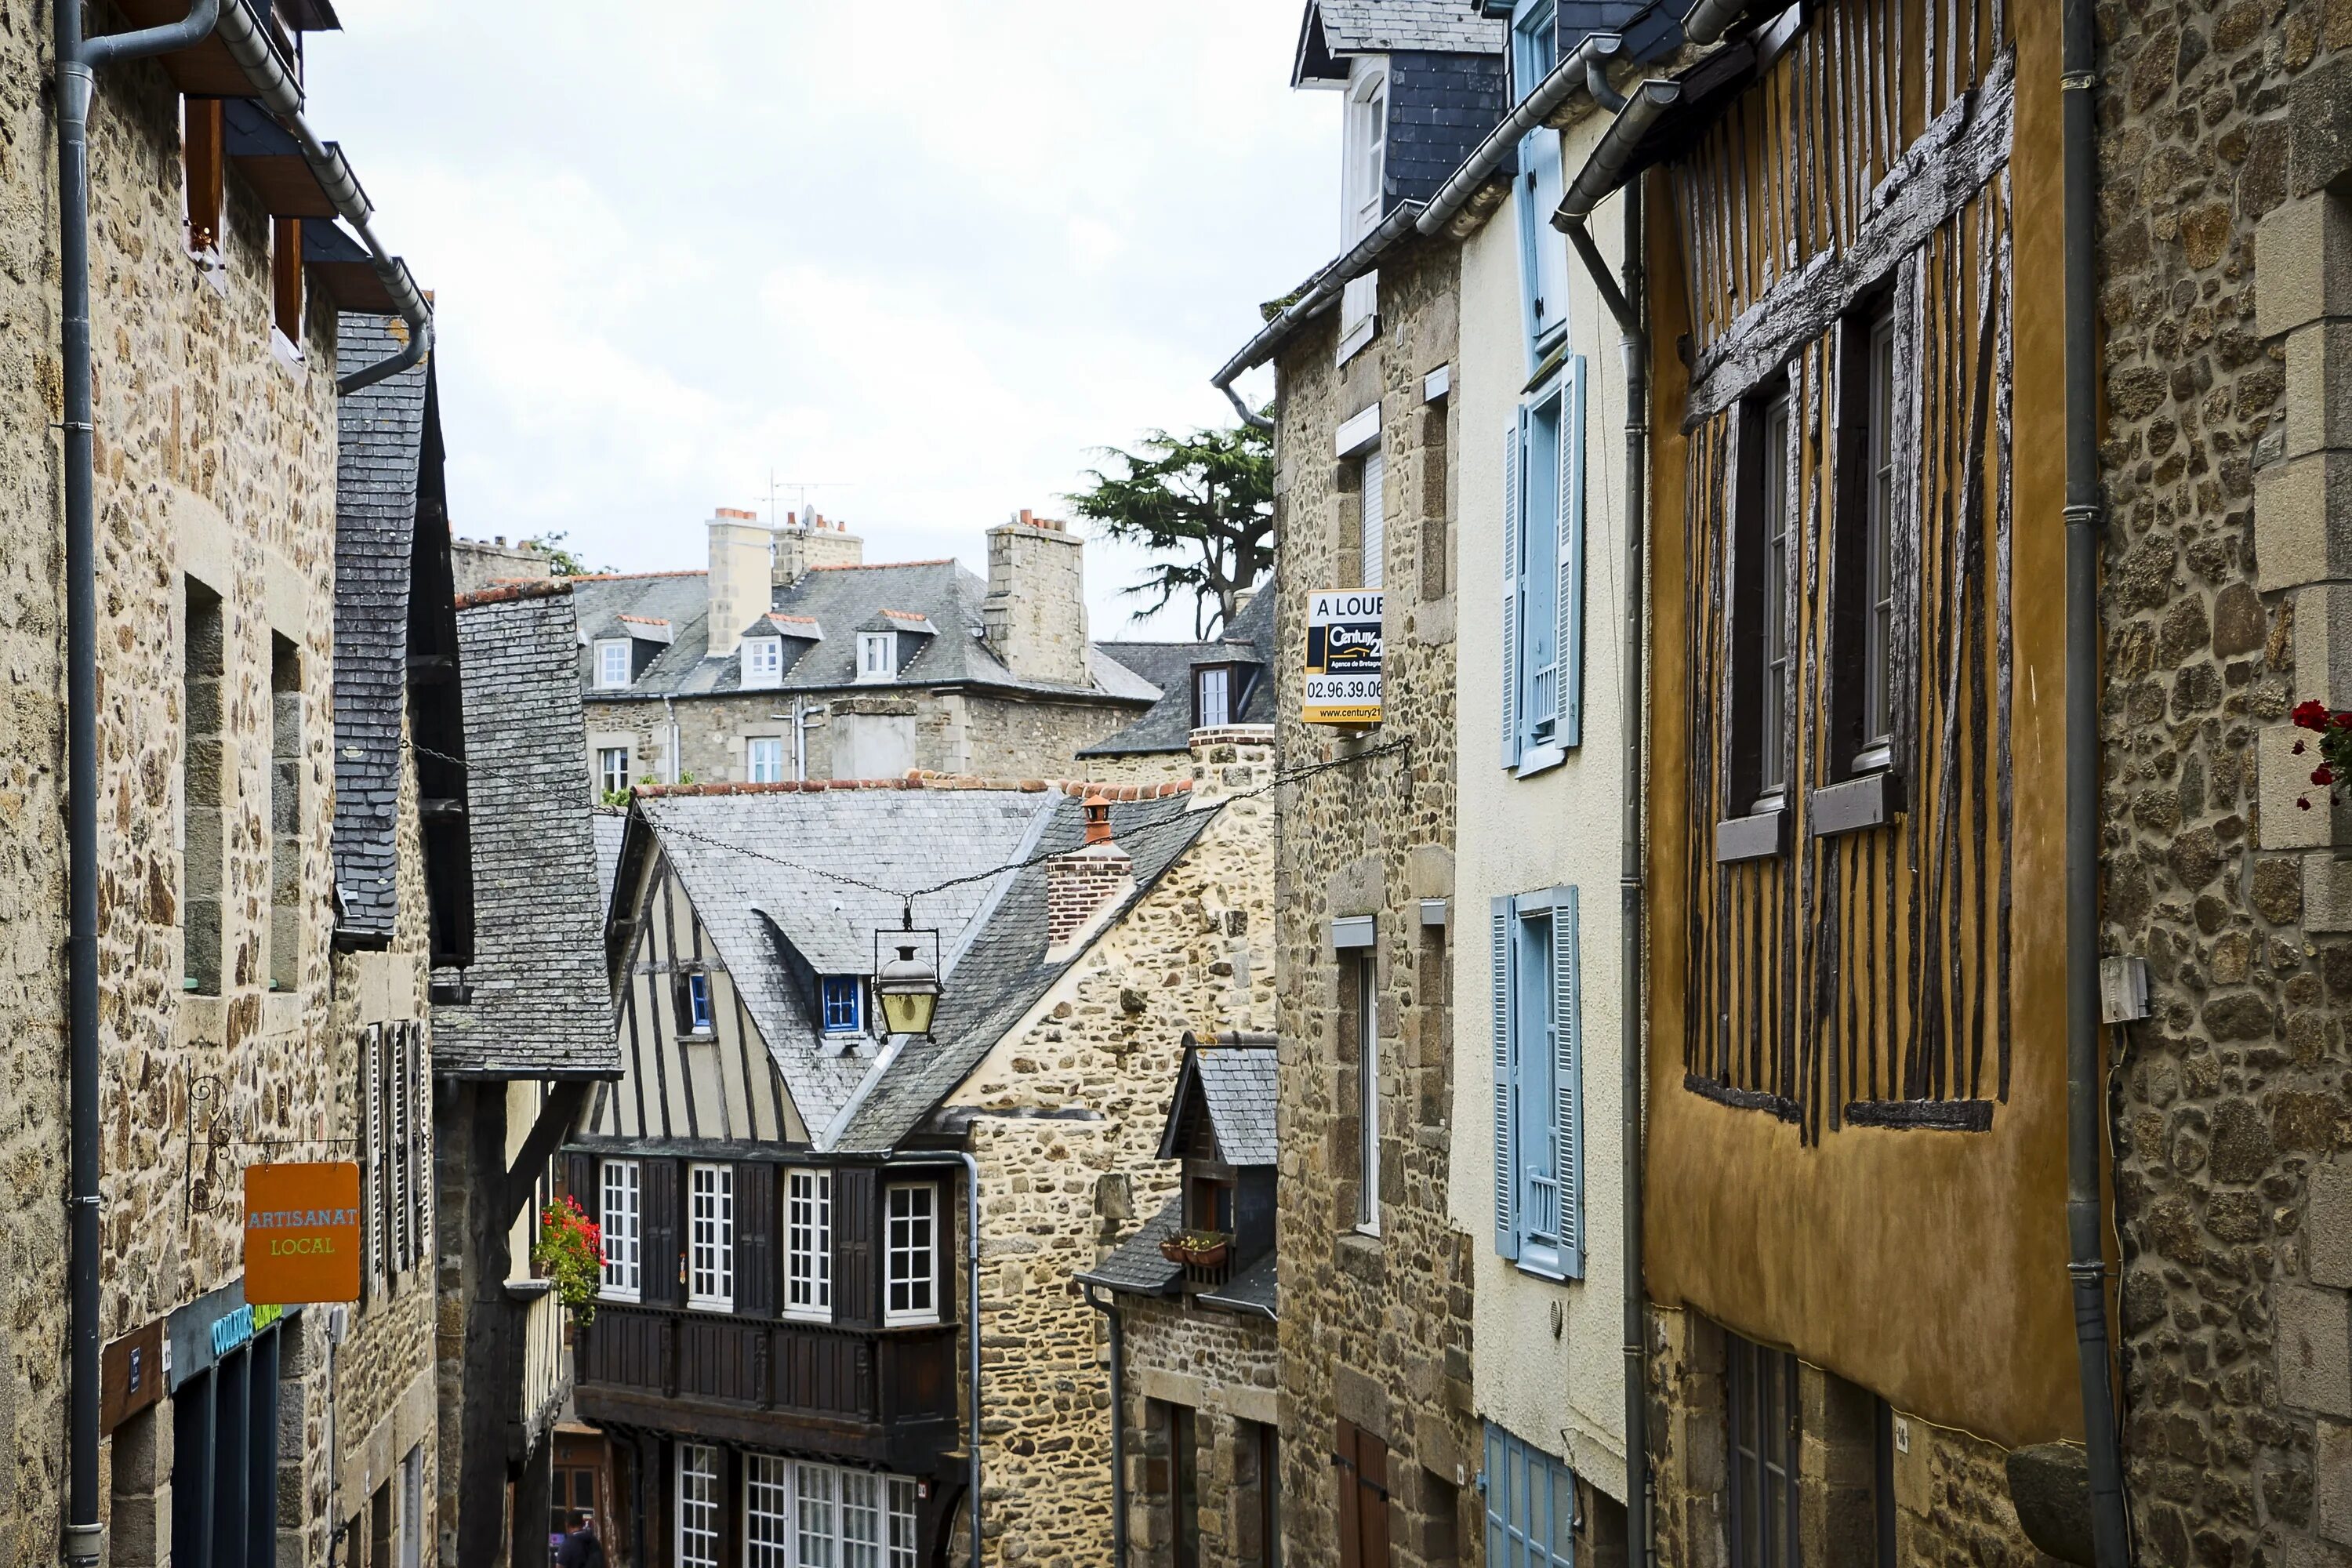 This old town. Франция старый город. Лорен город Франция. Старинный Европейский город. Европейская деревня.